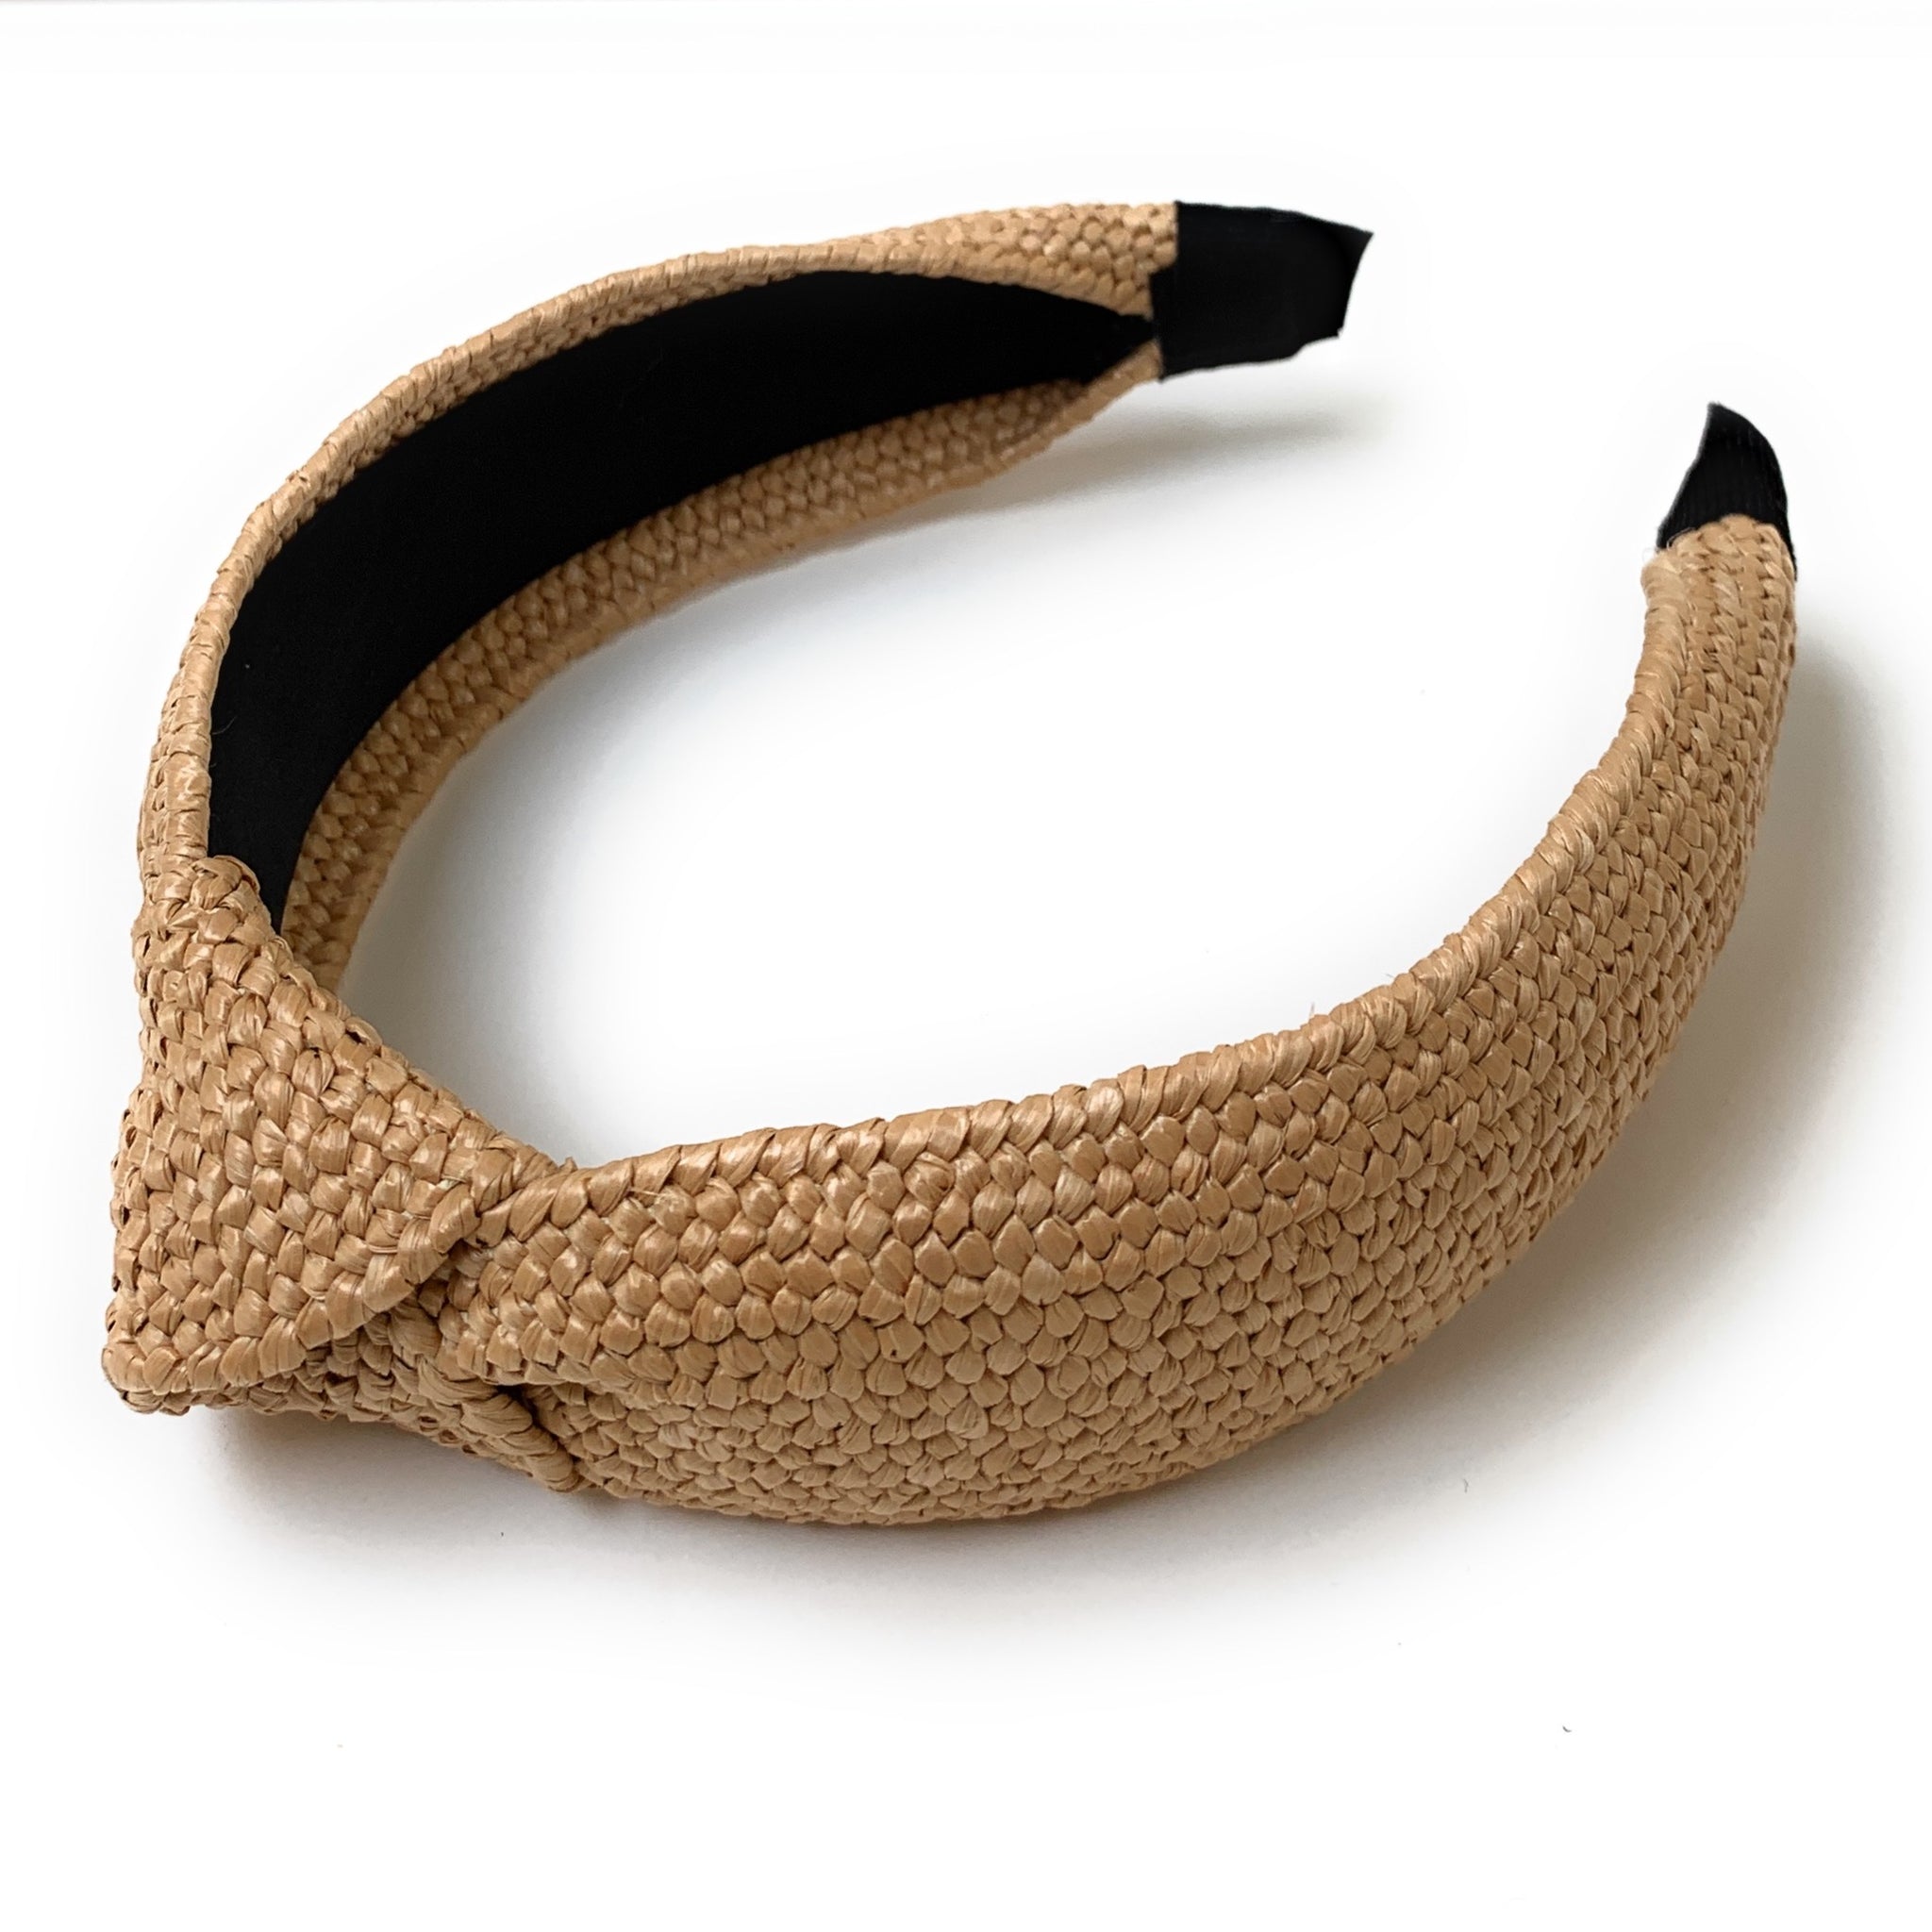 Top Knot Woven Headband, Raffia Headband, Hair Accessories for Women